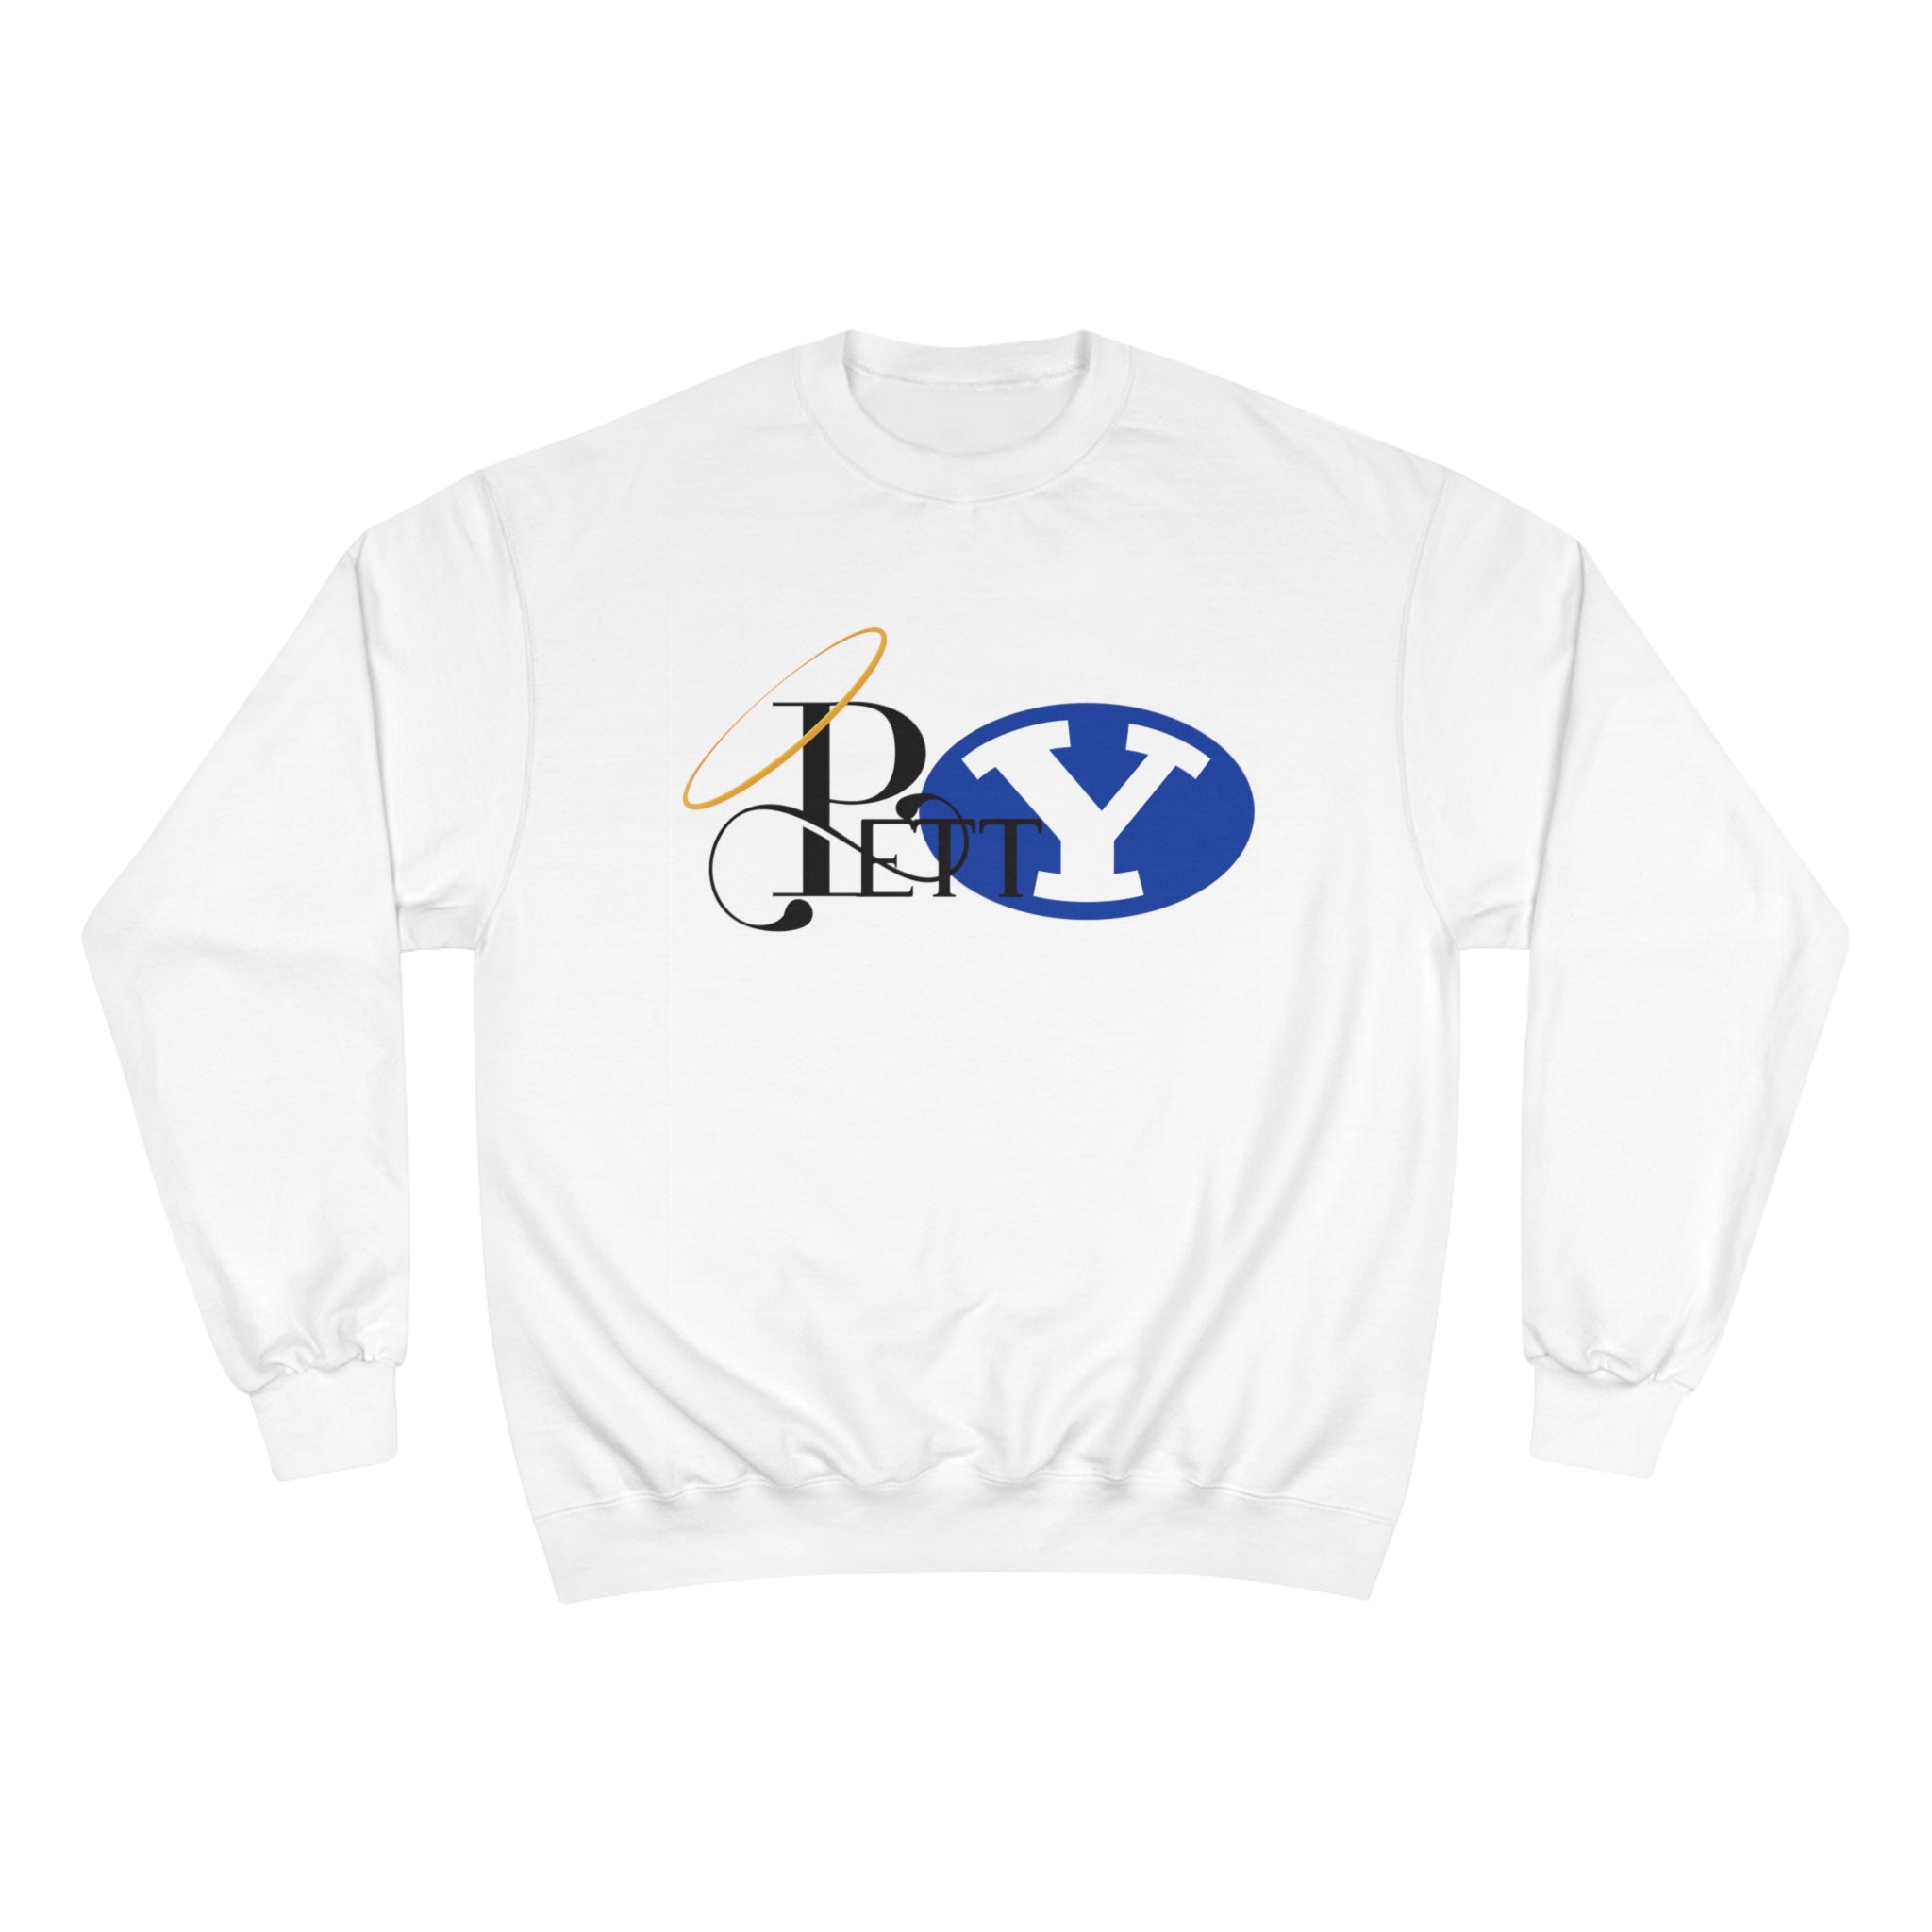 - FURDreams ”SLC” I Champion Sweatshirt